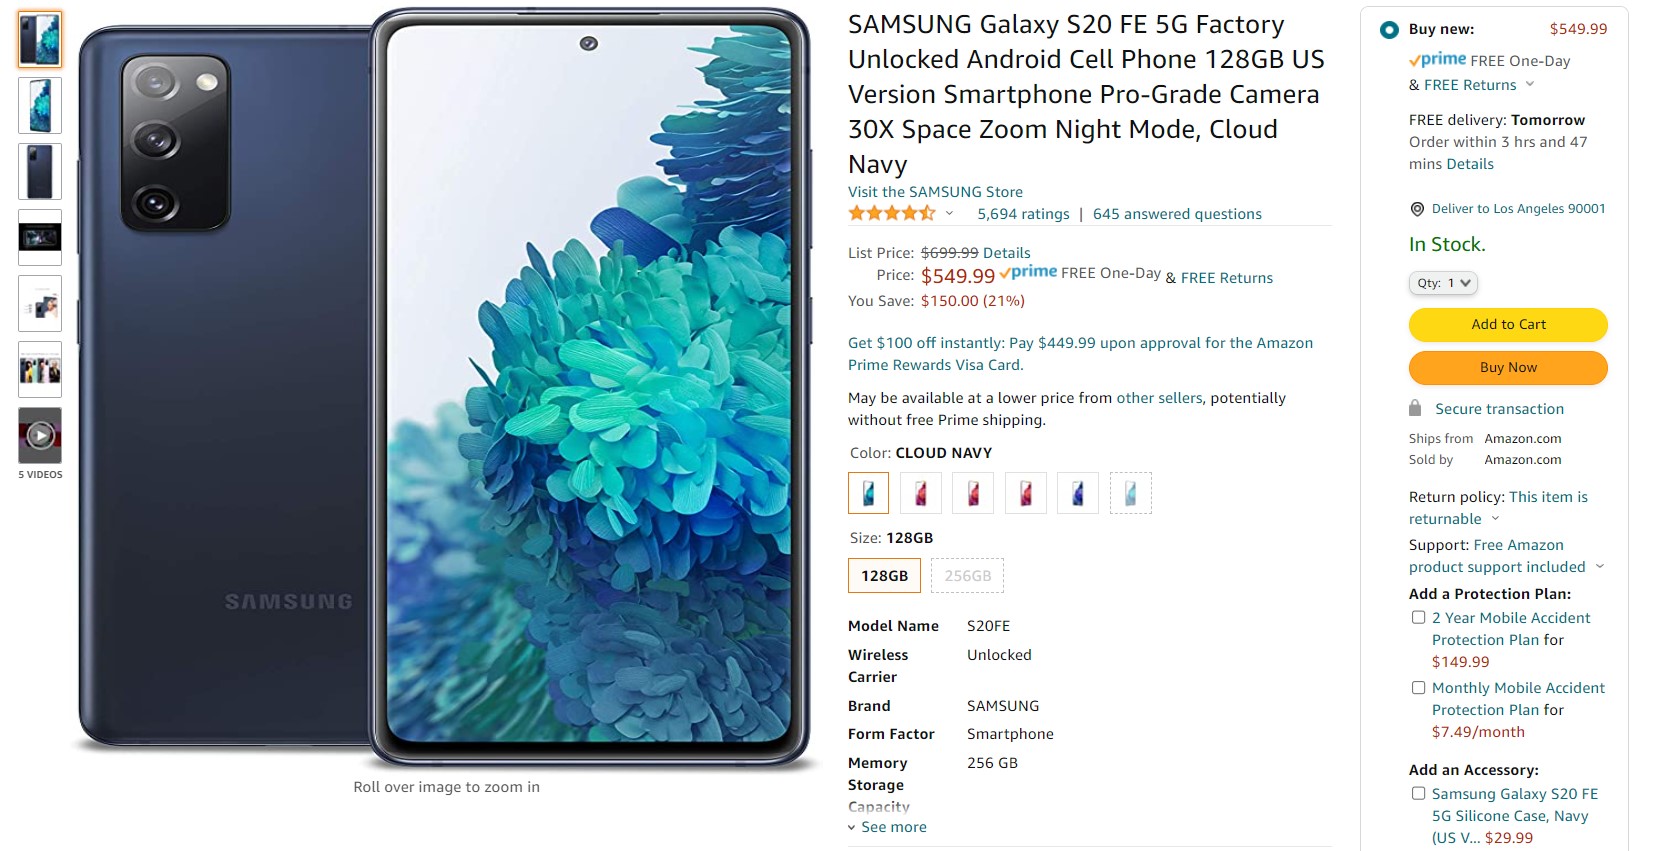 Samsung Galaxy S20 FE Amazon Offer